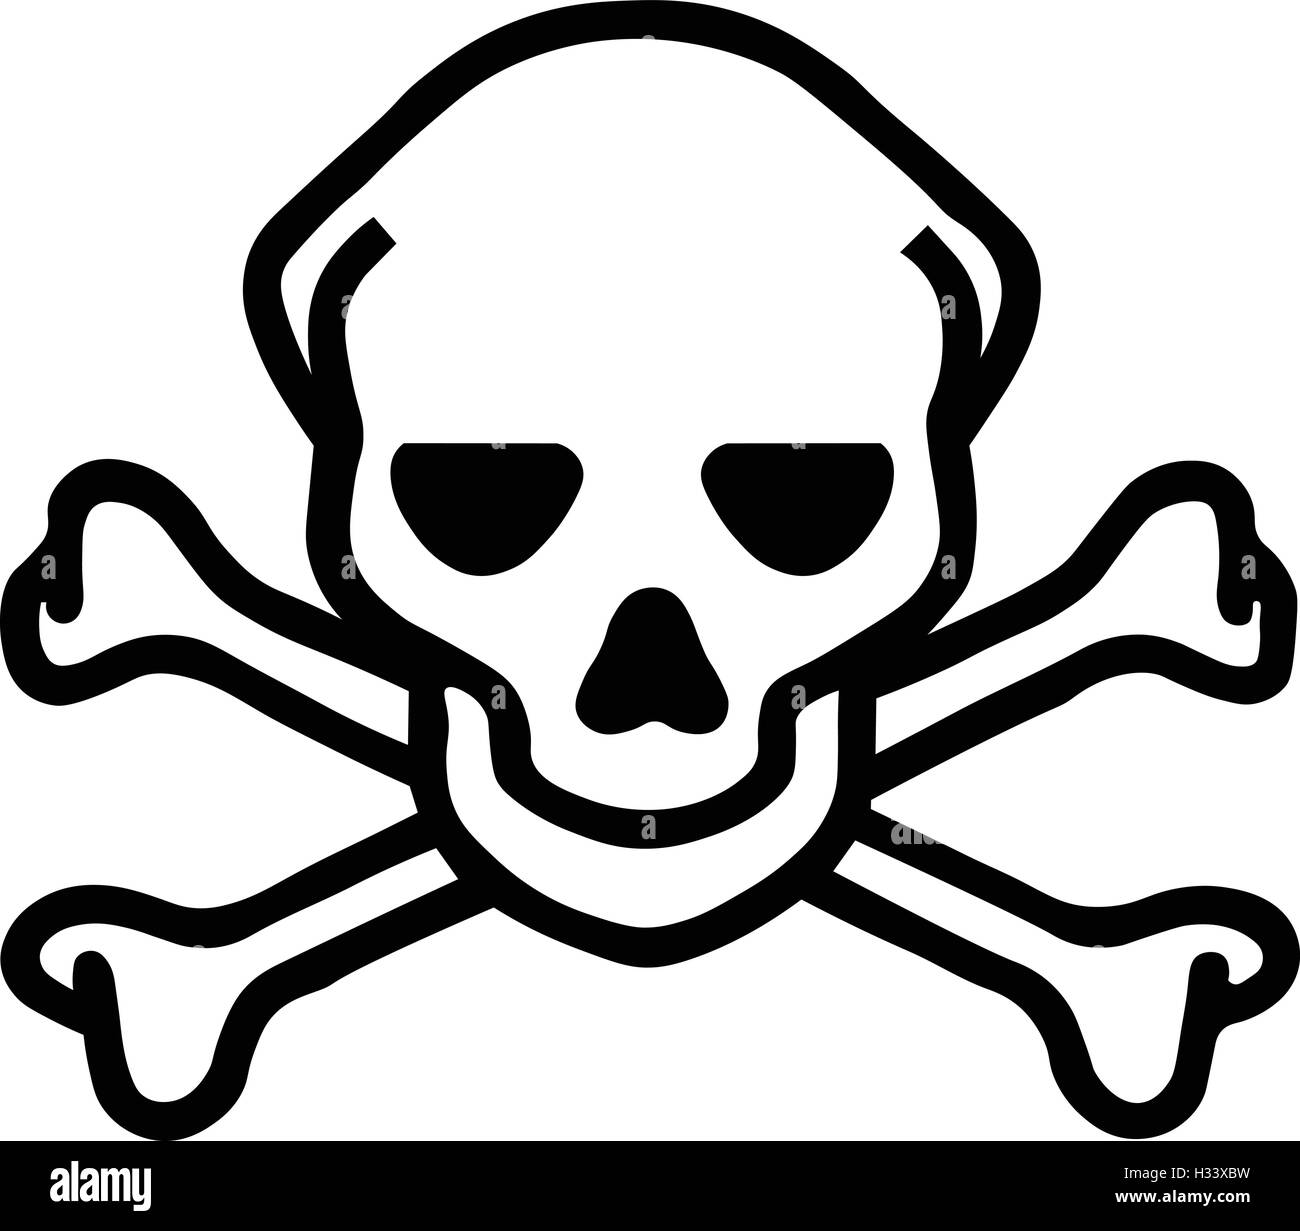 https://c8.alamy.com/comp/H33XBW/skull-and-crossbones-icon-skull-and-crossbones-symbol-danger-warning-H33XBW.jpg